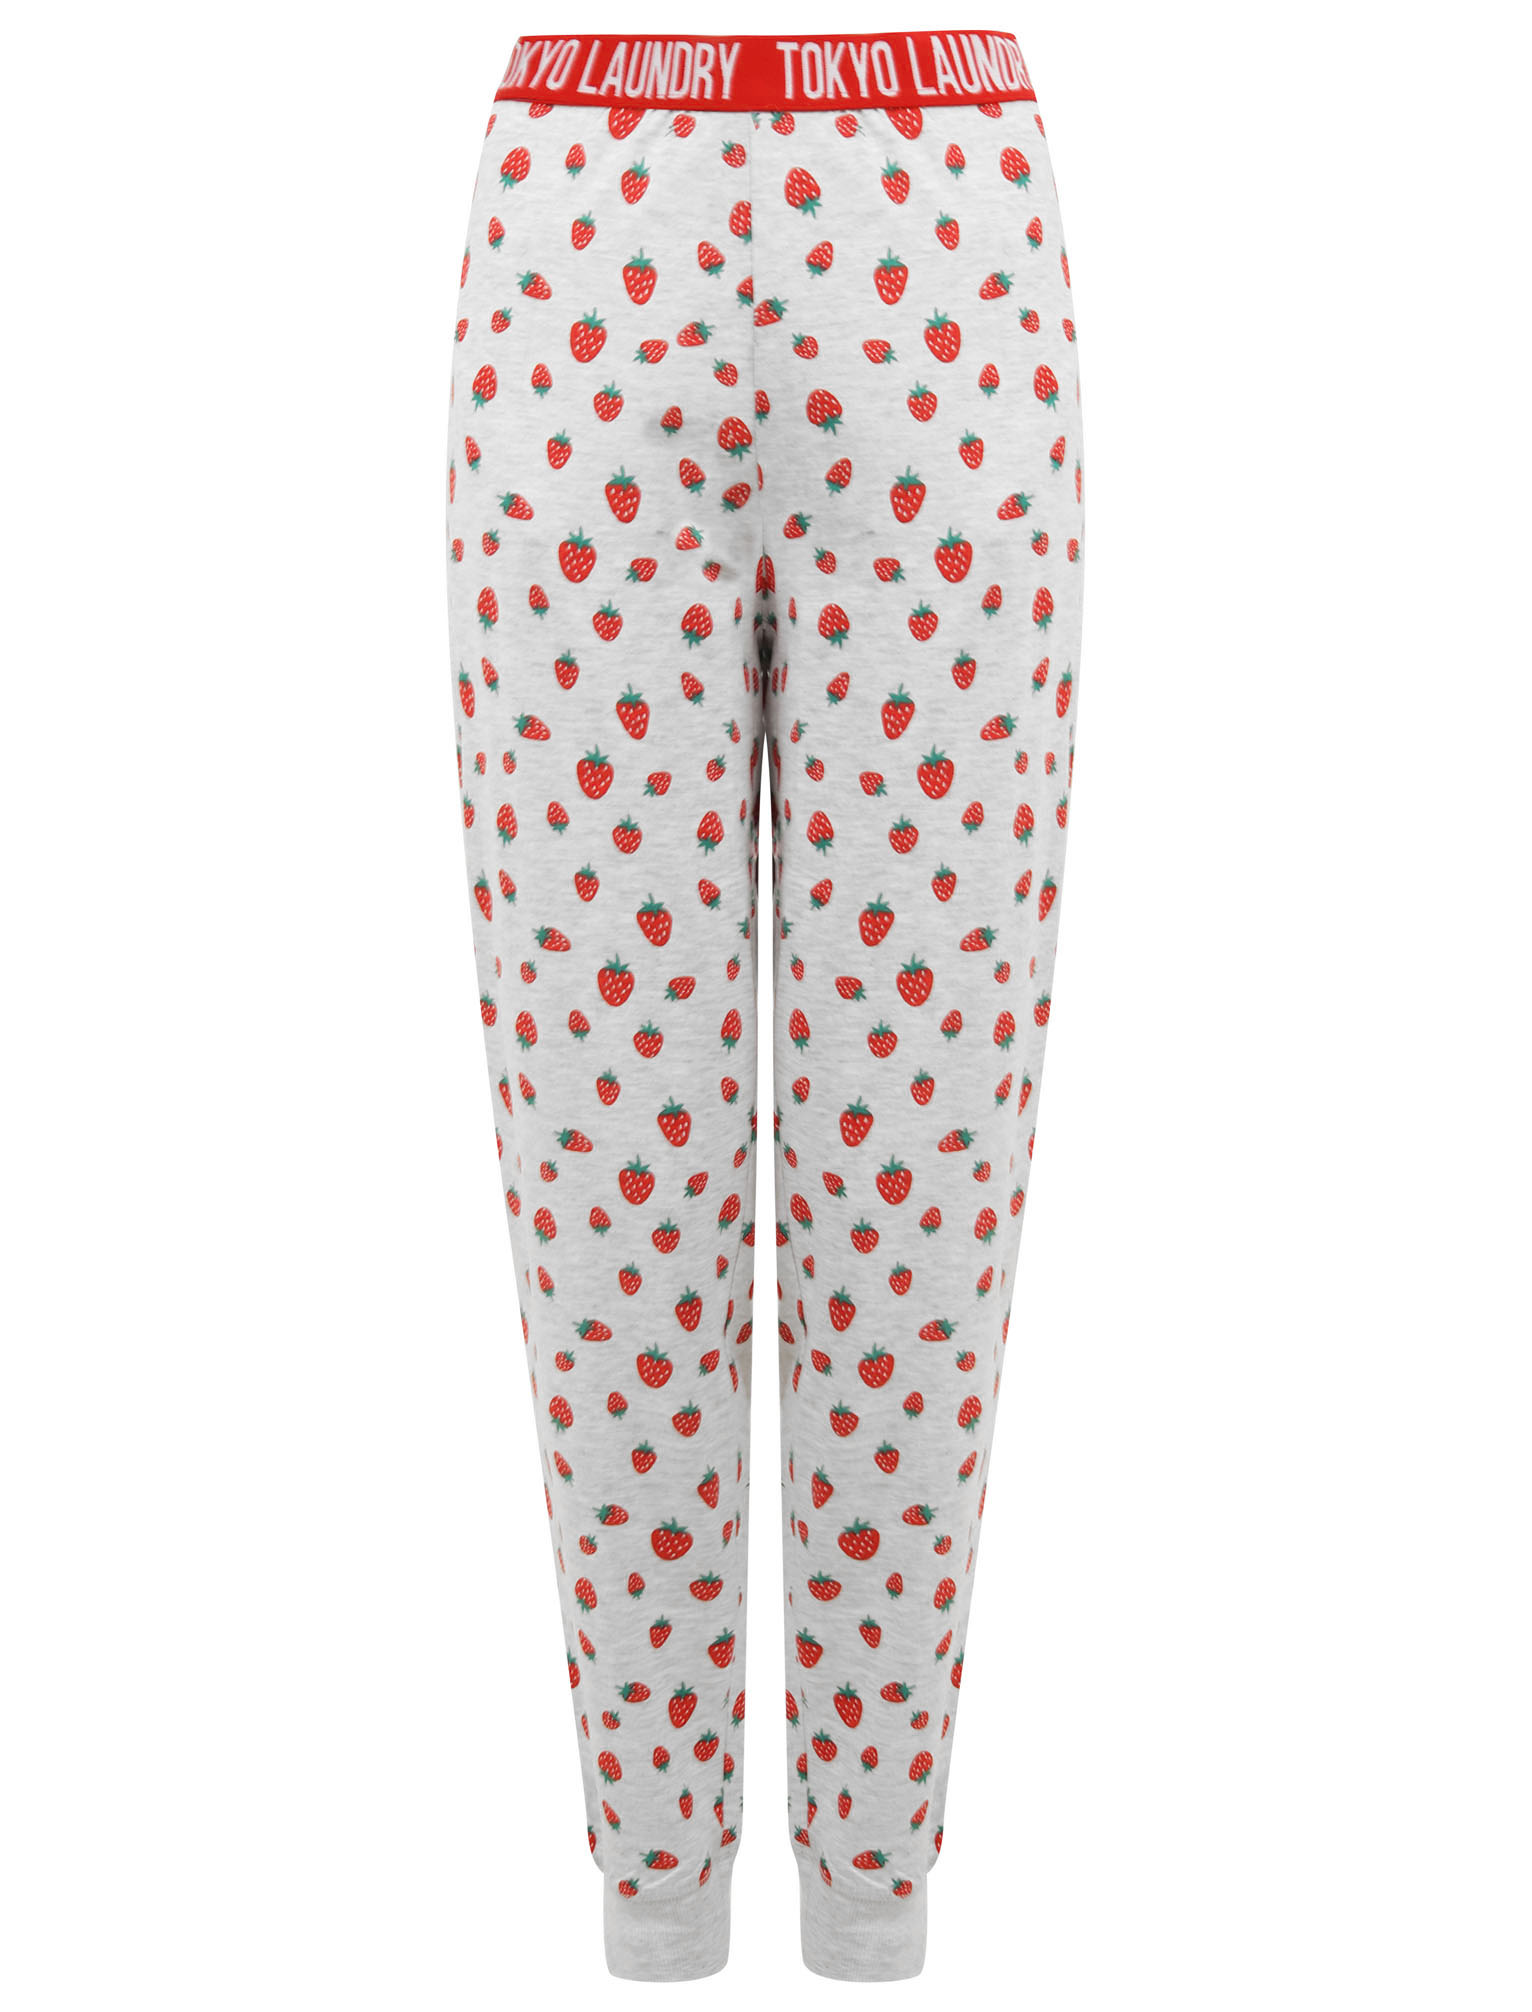 Tokyo Laundry Women's Cotton PJ Pyjama Set Top Bottoms Nightwear ...